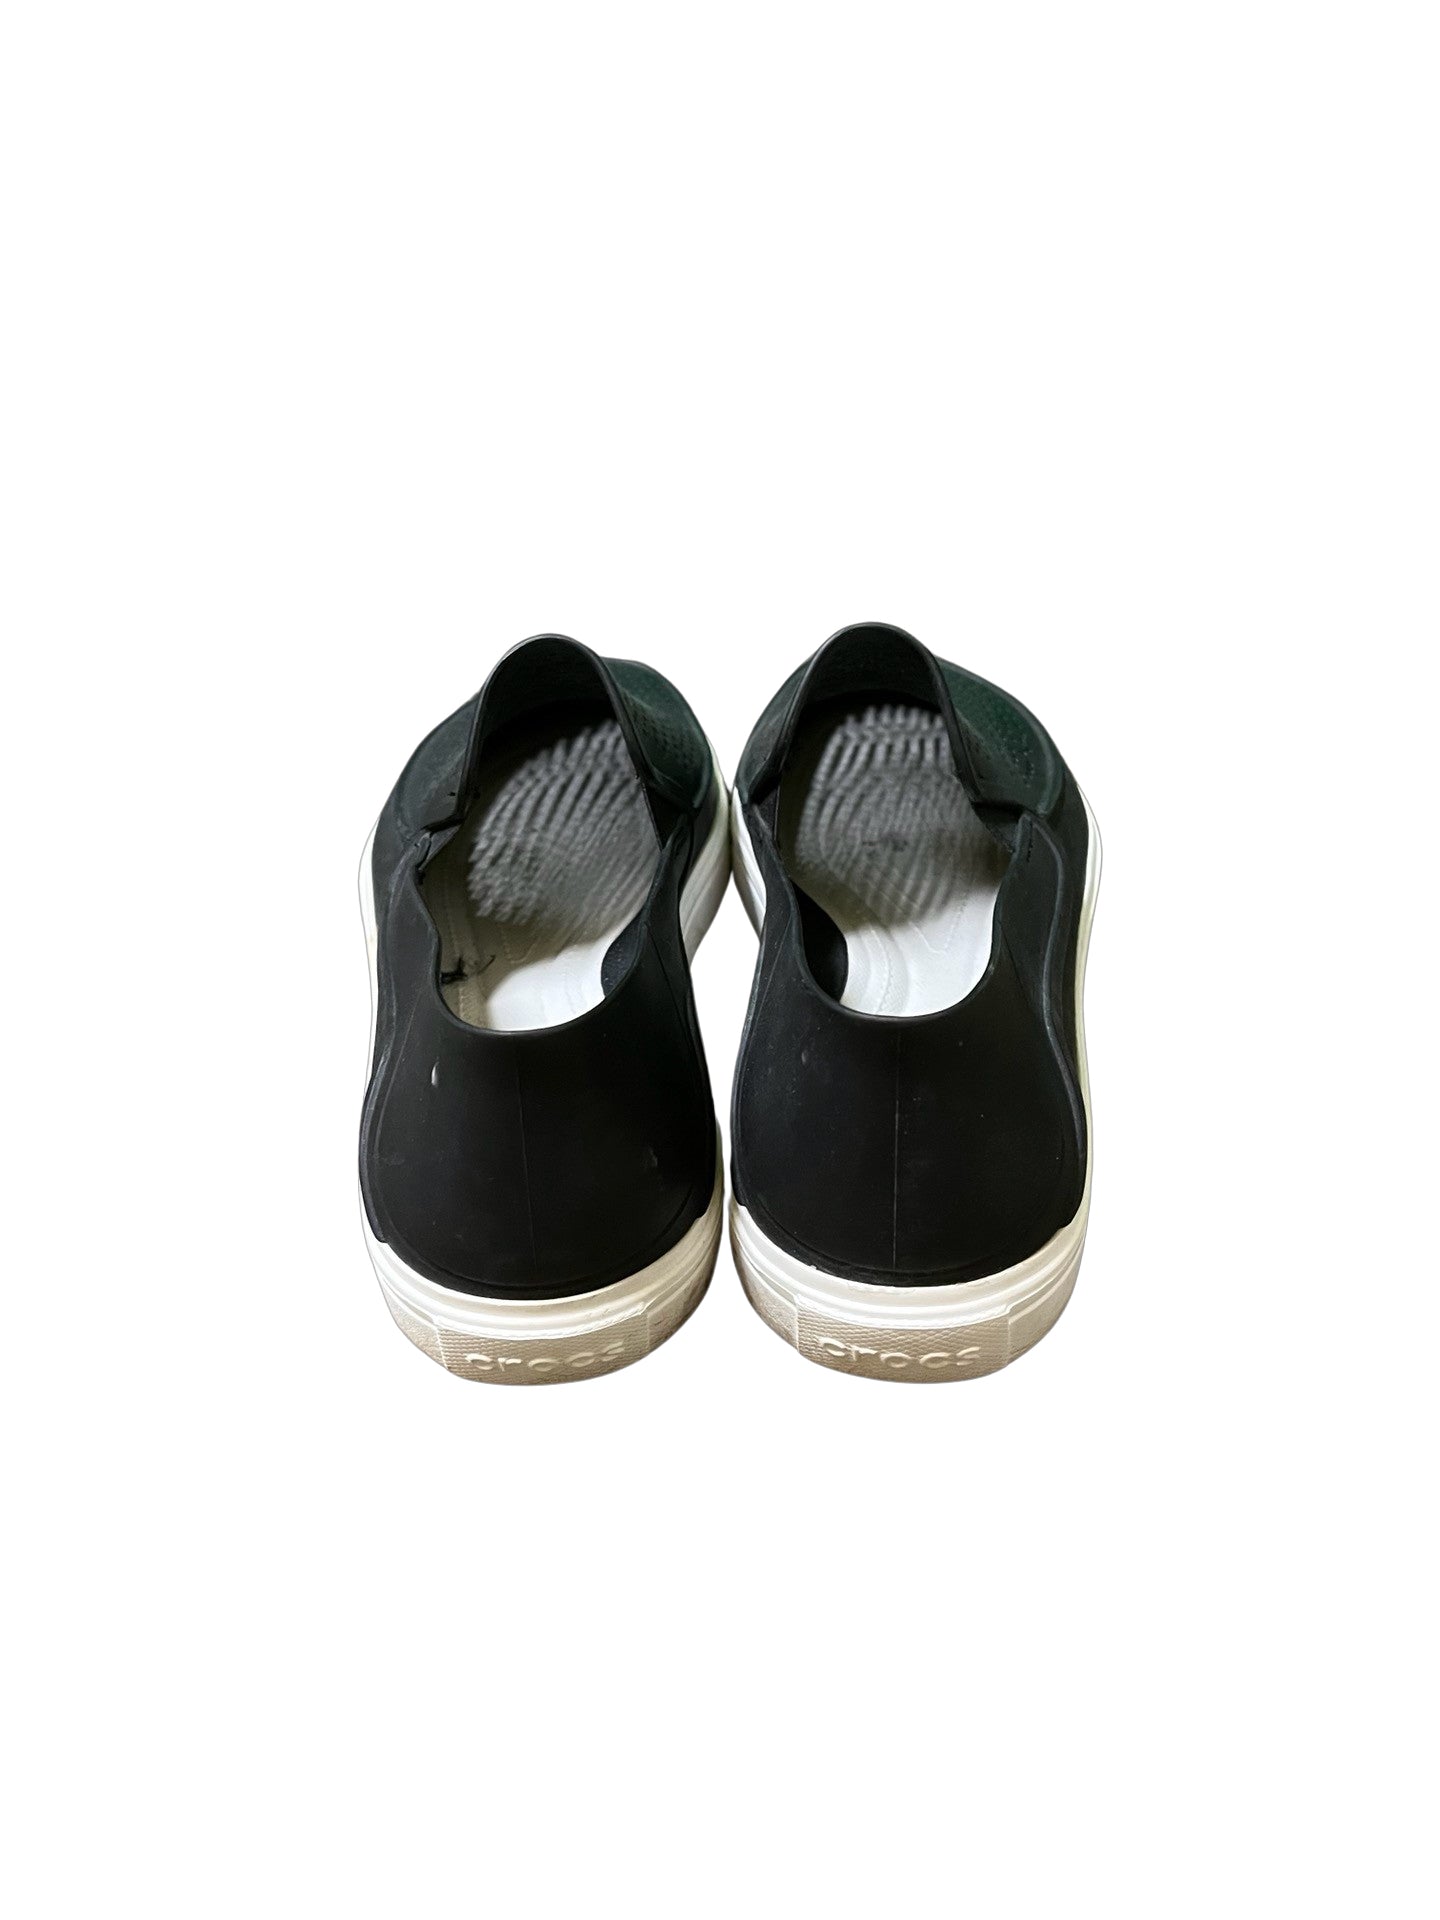 Crocs Size 12 Black sneakers